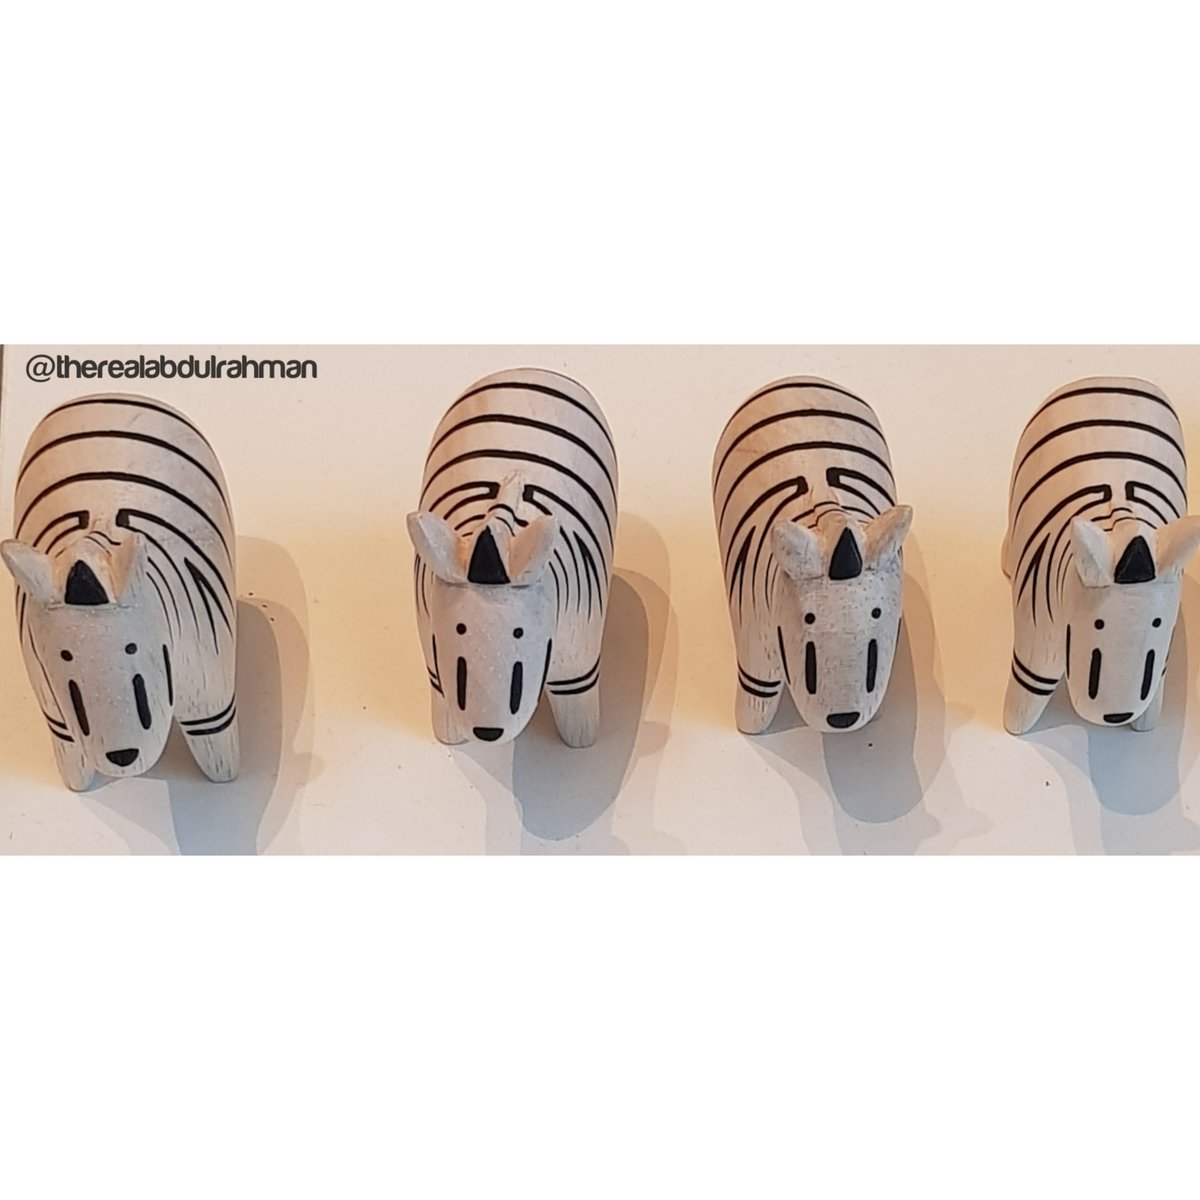 Zebra Figurine Toy

#toys #toy #zebra #zebras #plastictoys #photooftheday #photography #mobilephotography #portrait #photowalk